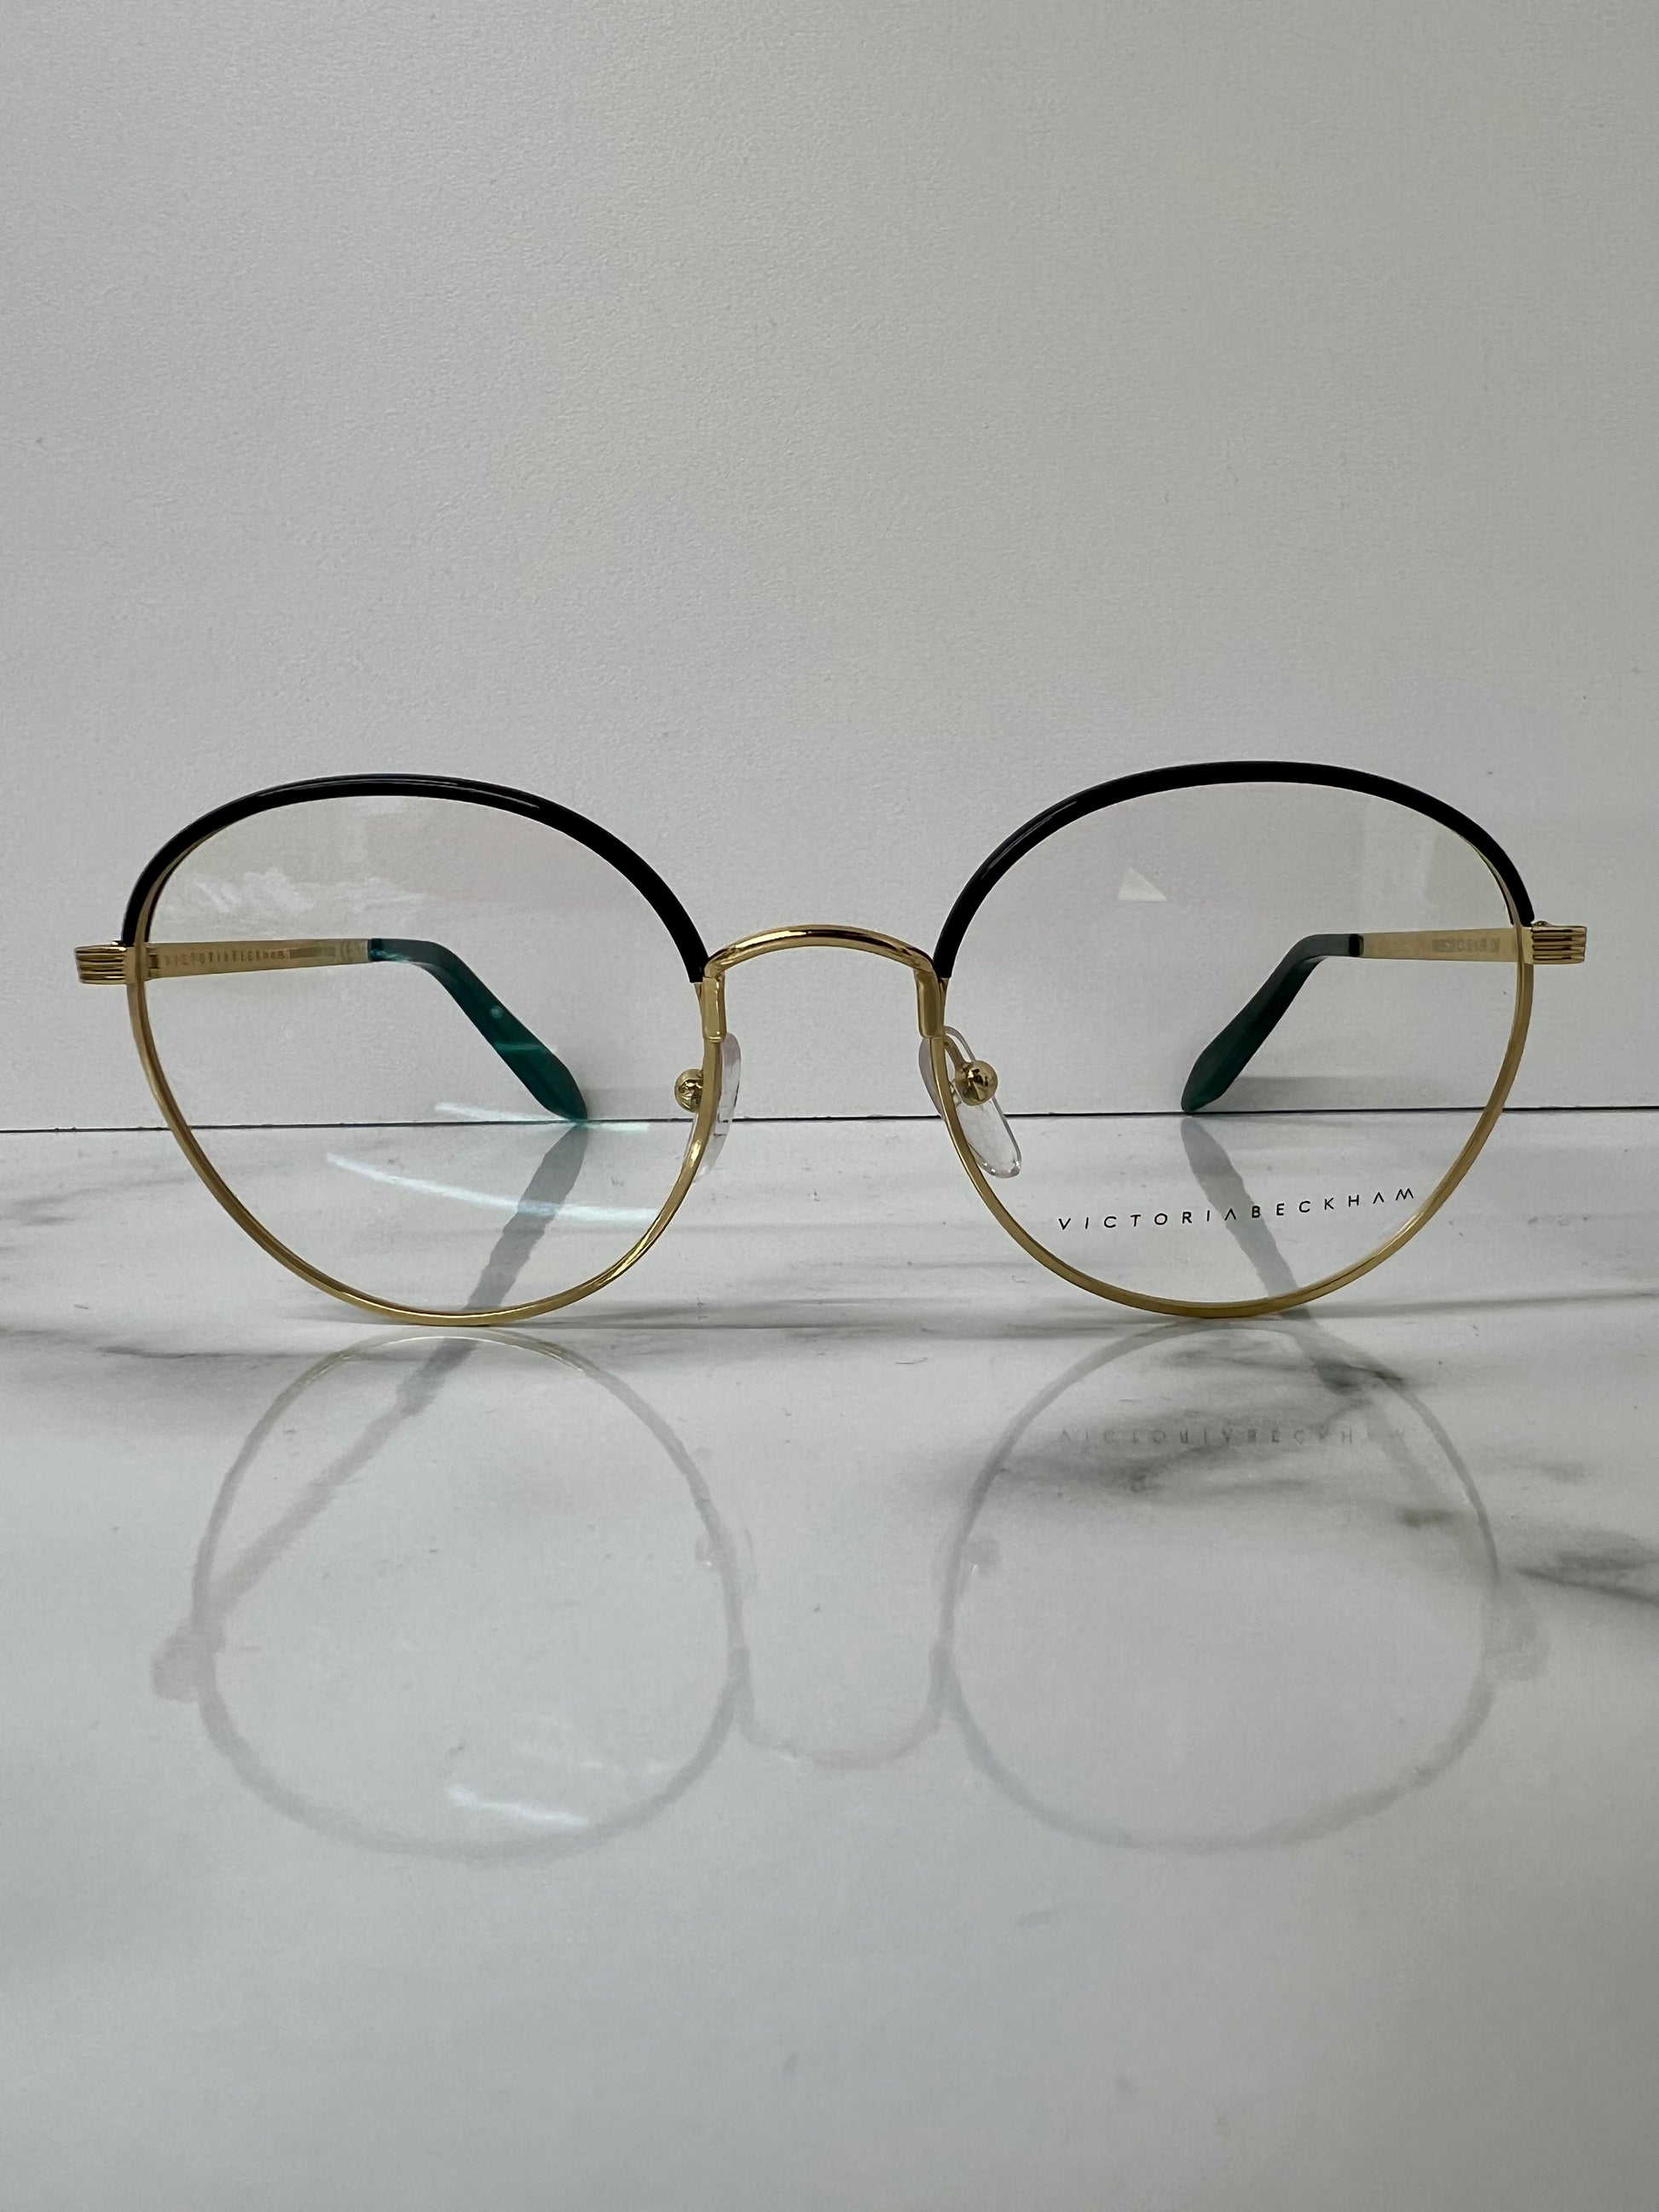 Victoria Beckham Optical Glasses Frames Women Round Gold Eyeglasses VBOPT221